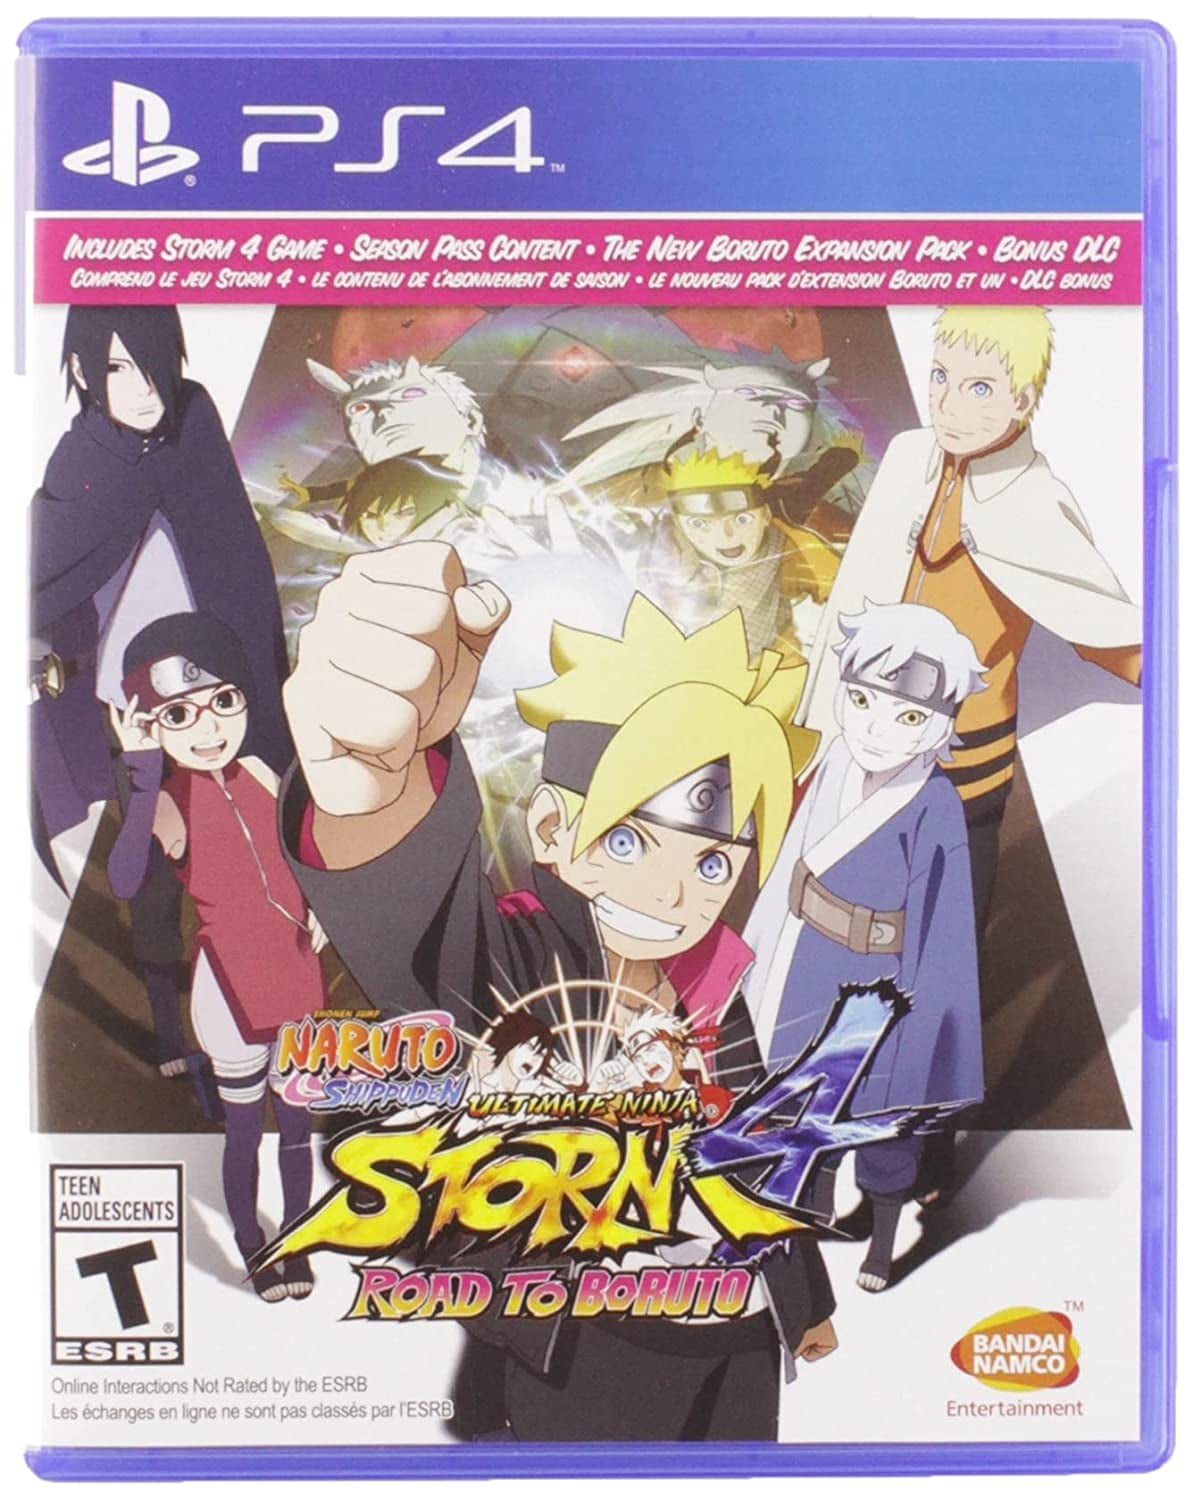 Play Naruto Online, a game of Naruto shippuden